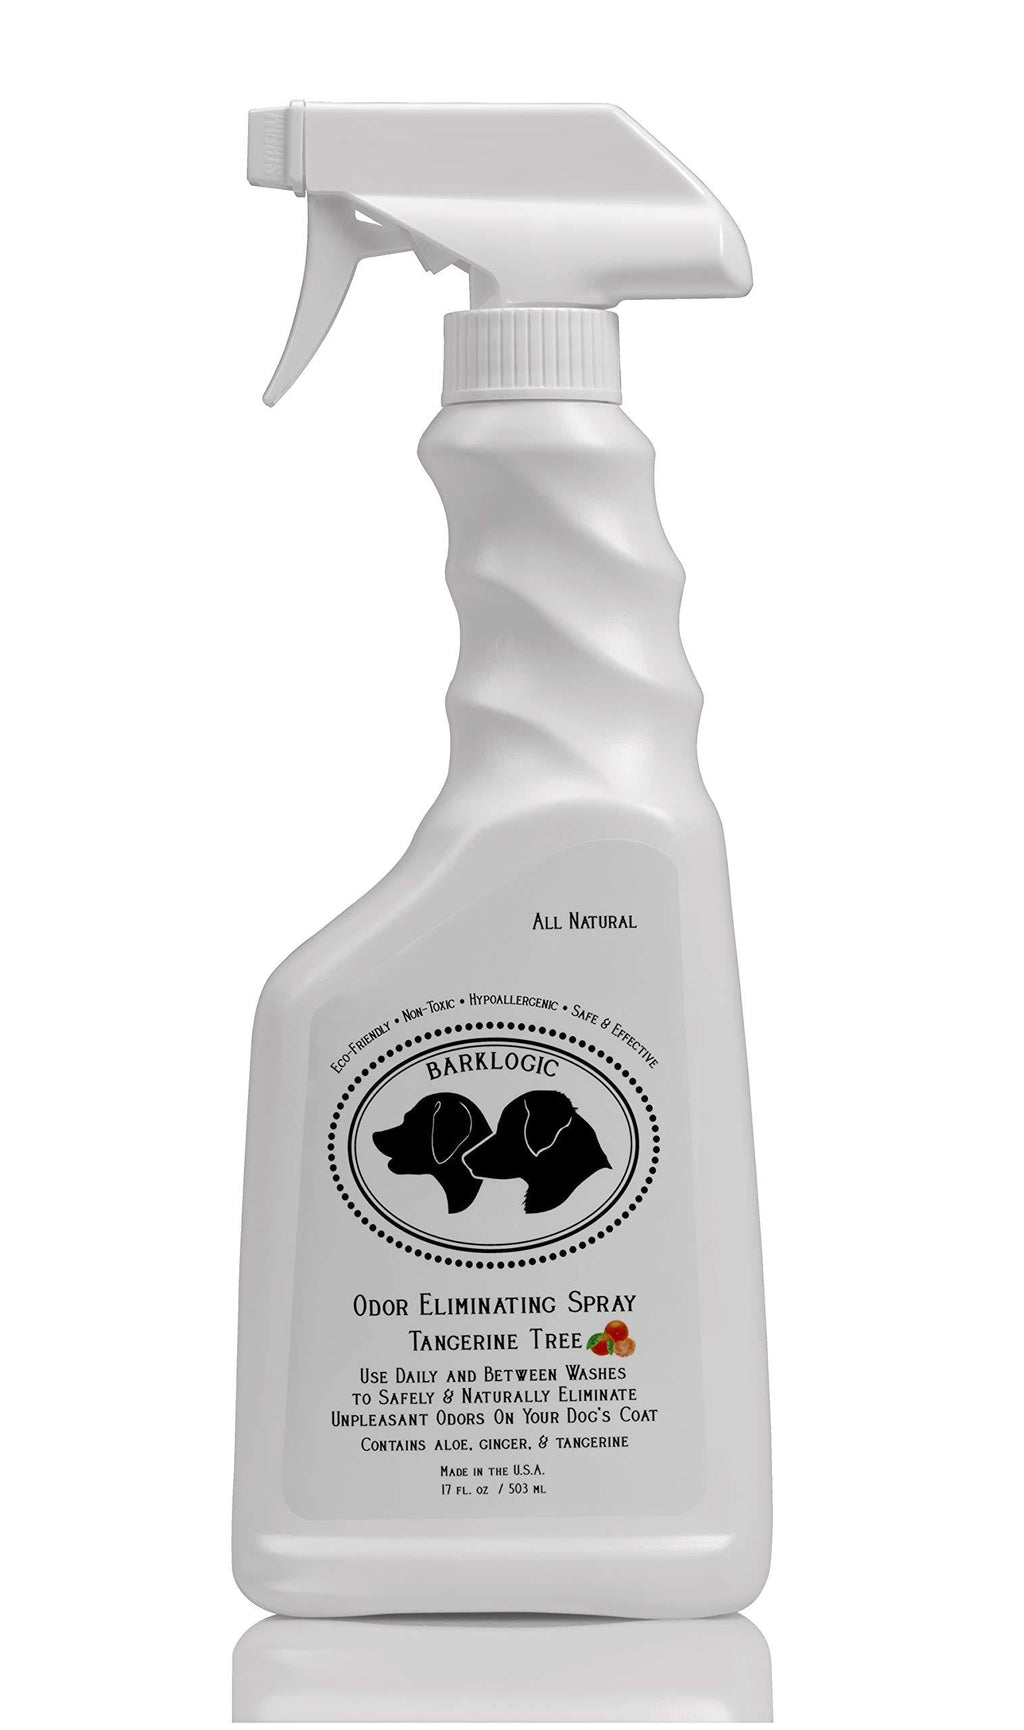 BarkLogic Natural Daily Pet Odor Eliminating Spray, 17 oz Tangerine Tree, Safely & Naturally Deodorizes - Spray is Sulfate Free, Phthalate Free, Vegan & Has No Artificial Fragrances - PawsPlanet Australia